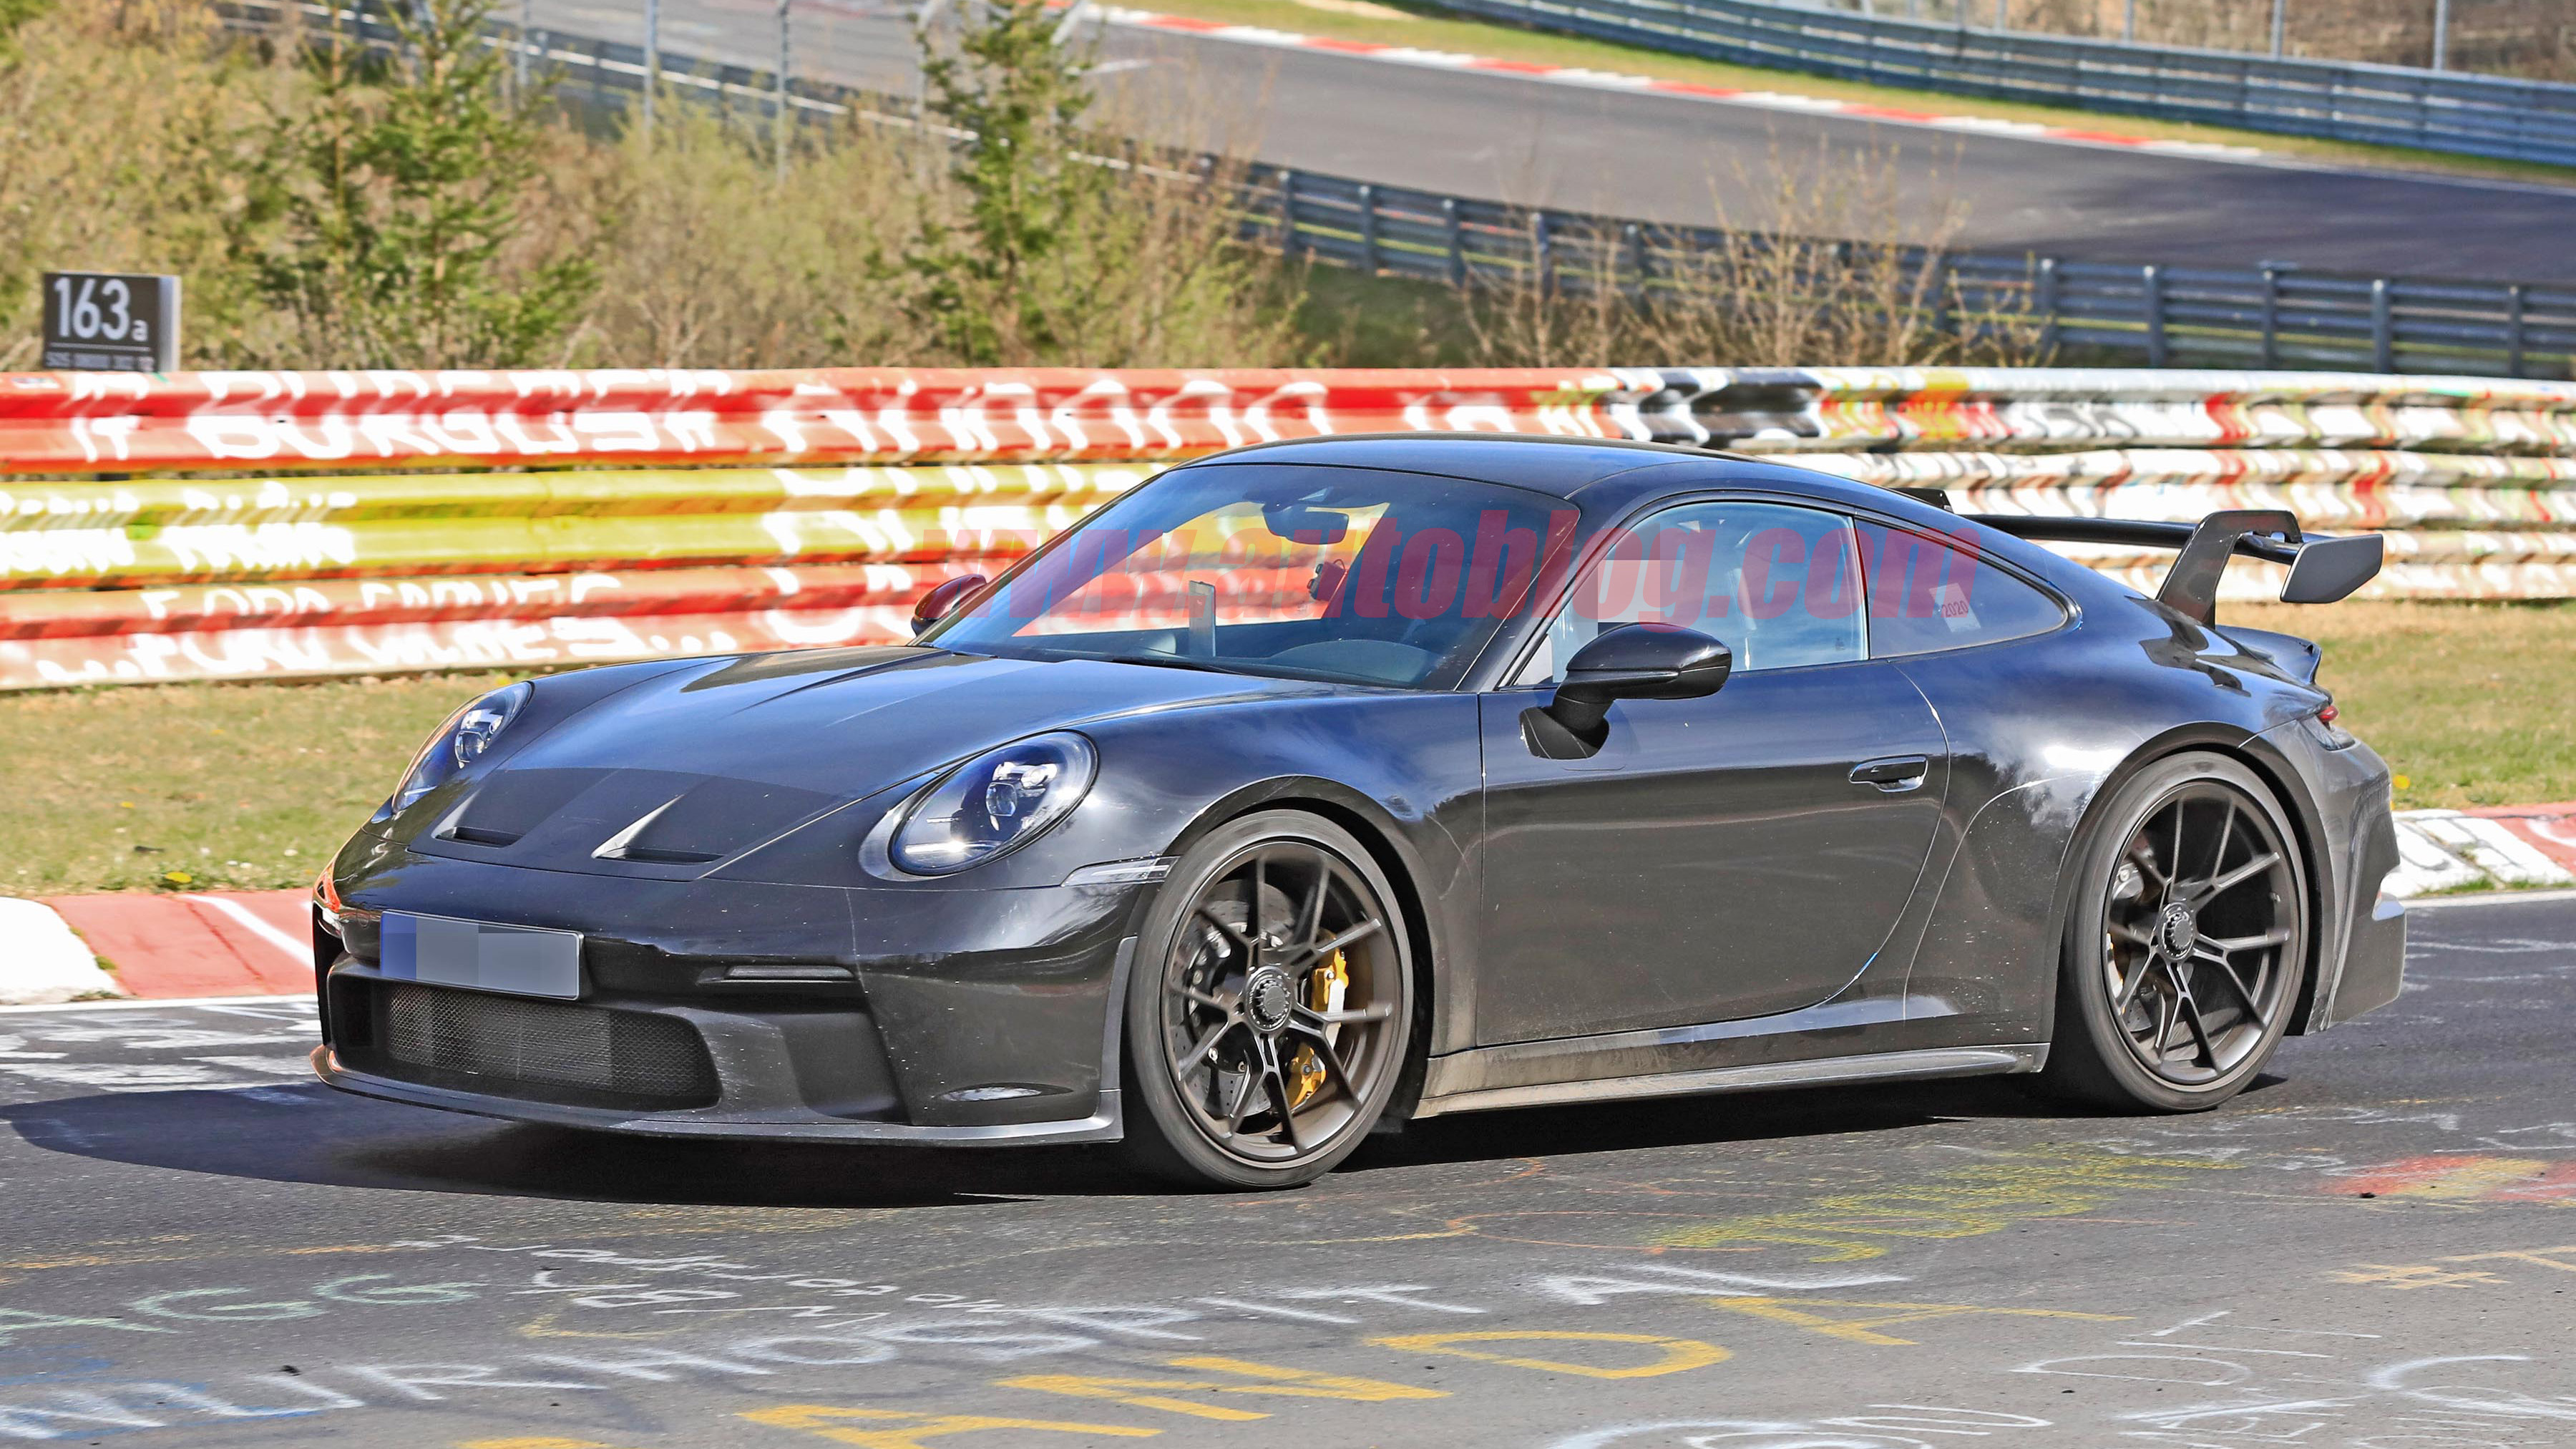 Our best look yet of the 992 Porsche 911 GT3 in spy photos.